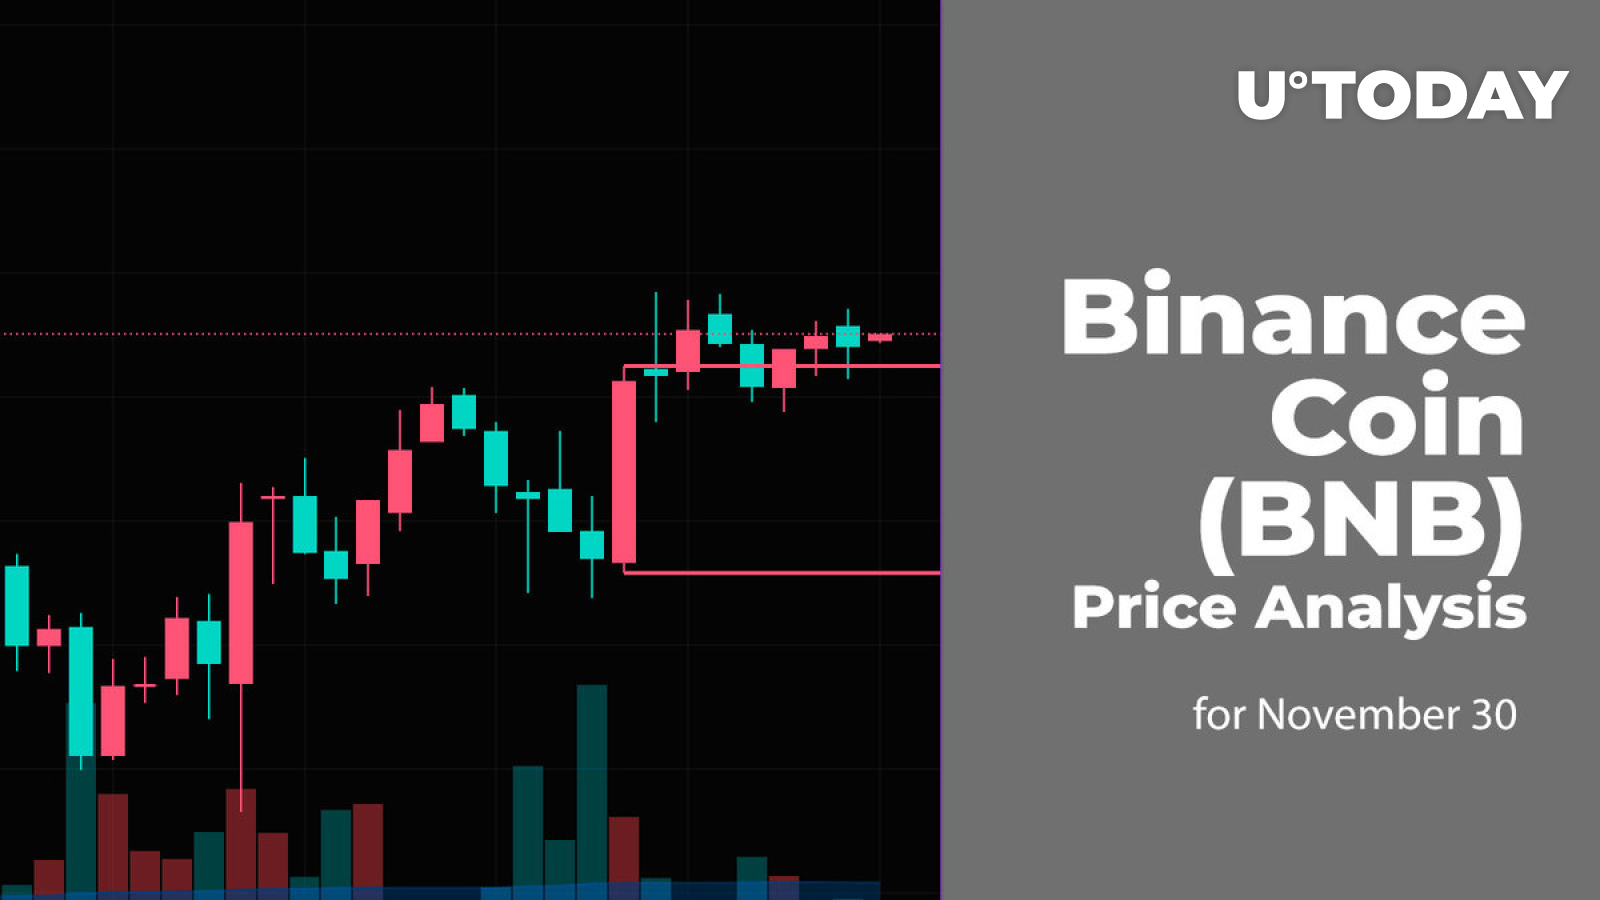 Binance Coin (BNB) Price Analysis for November 30